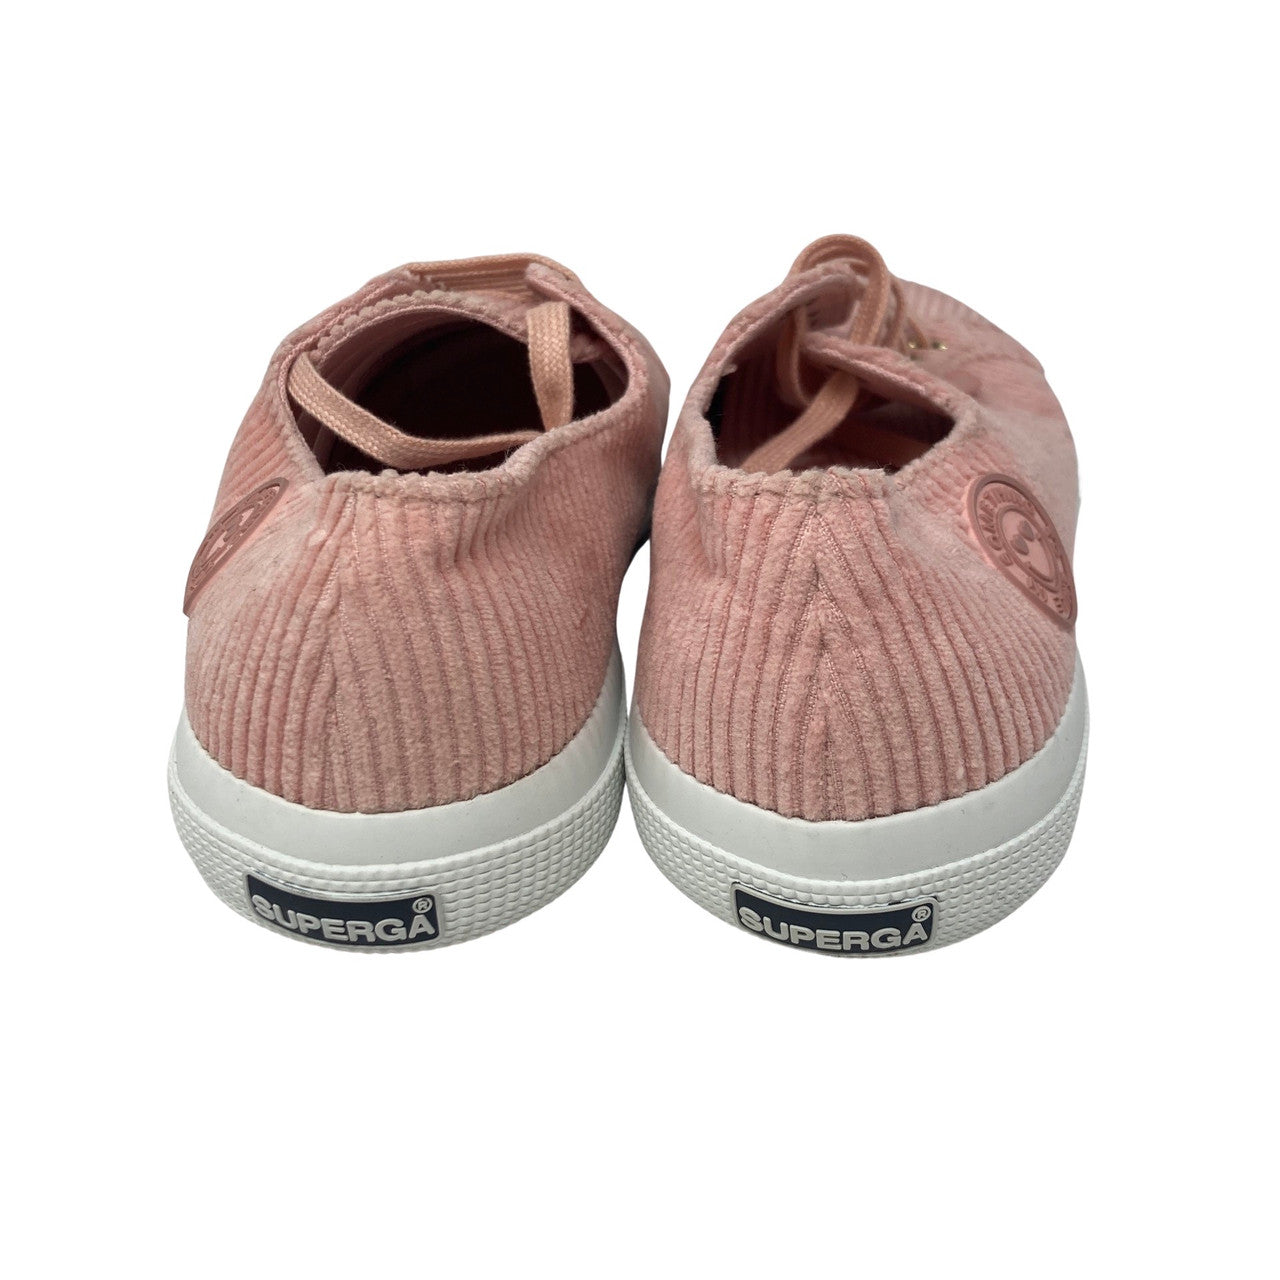 Superga X Something Navy Pink Cord Sneakers-back